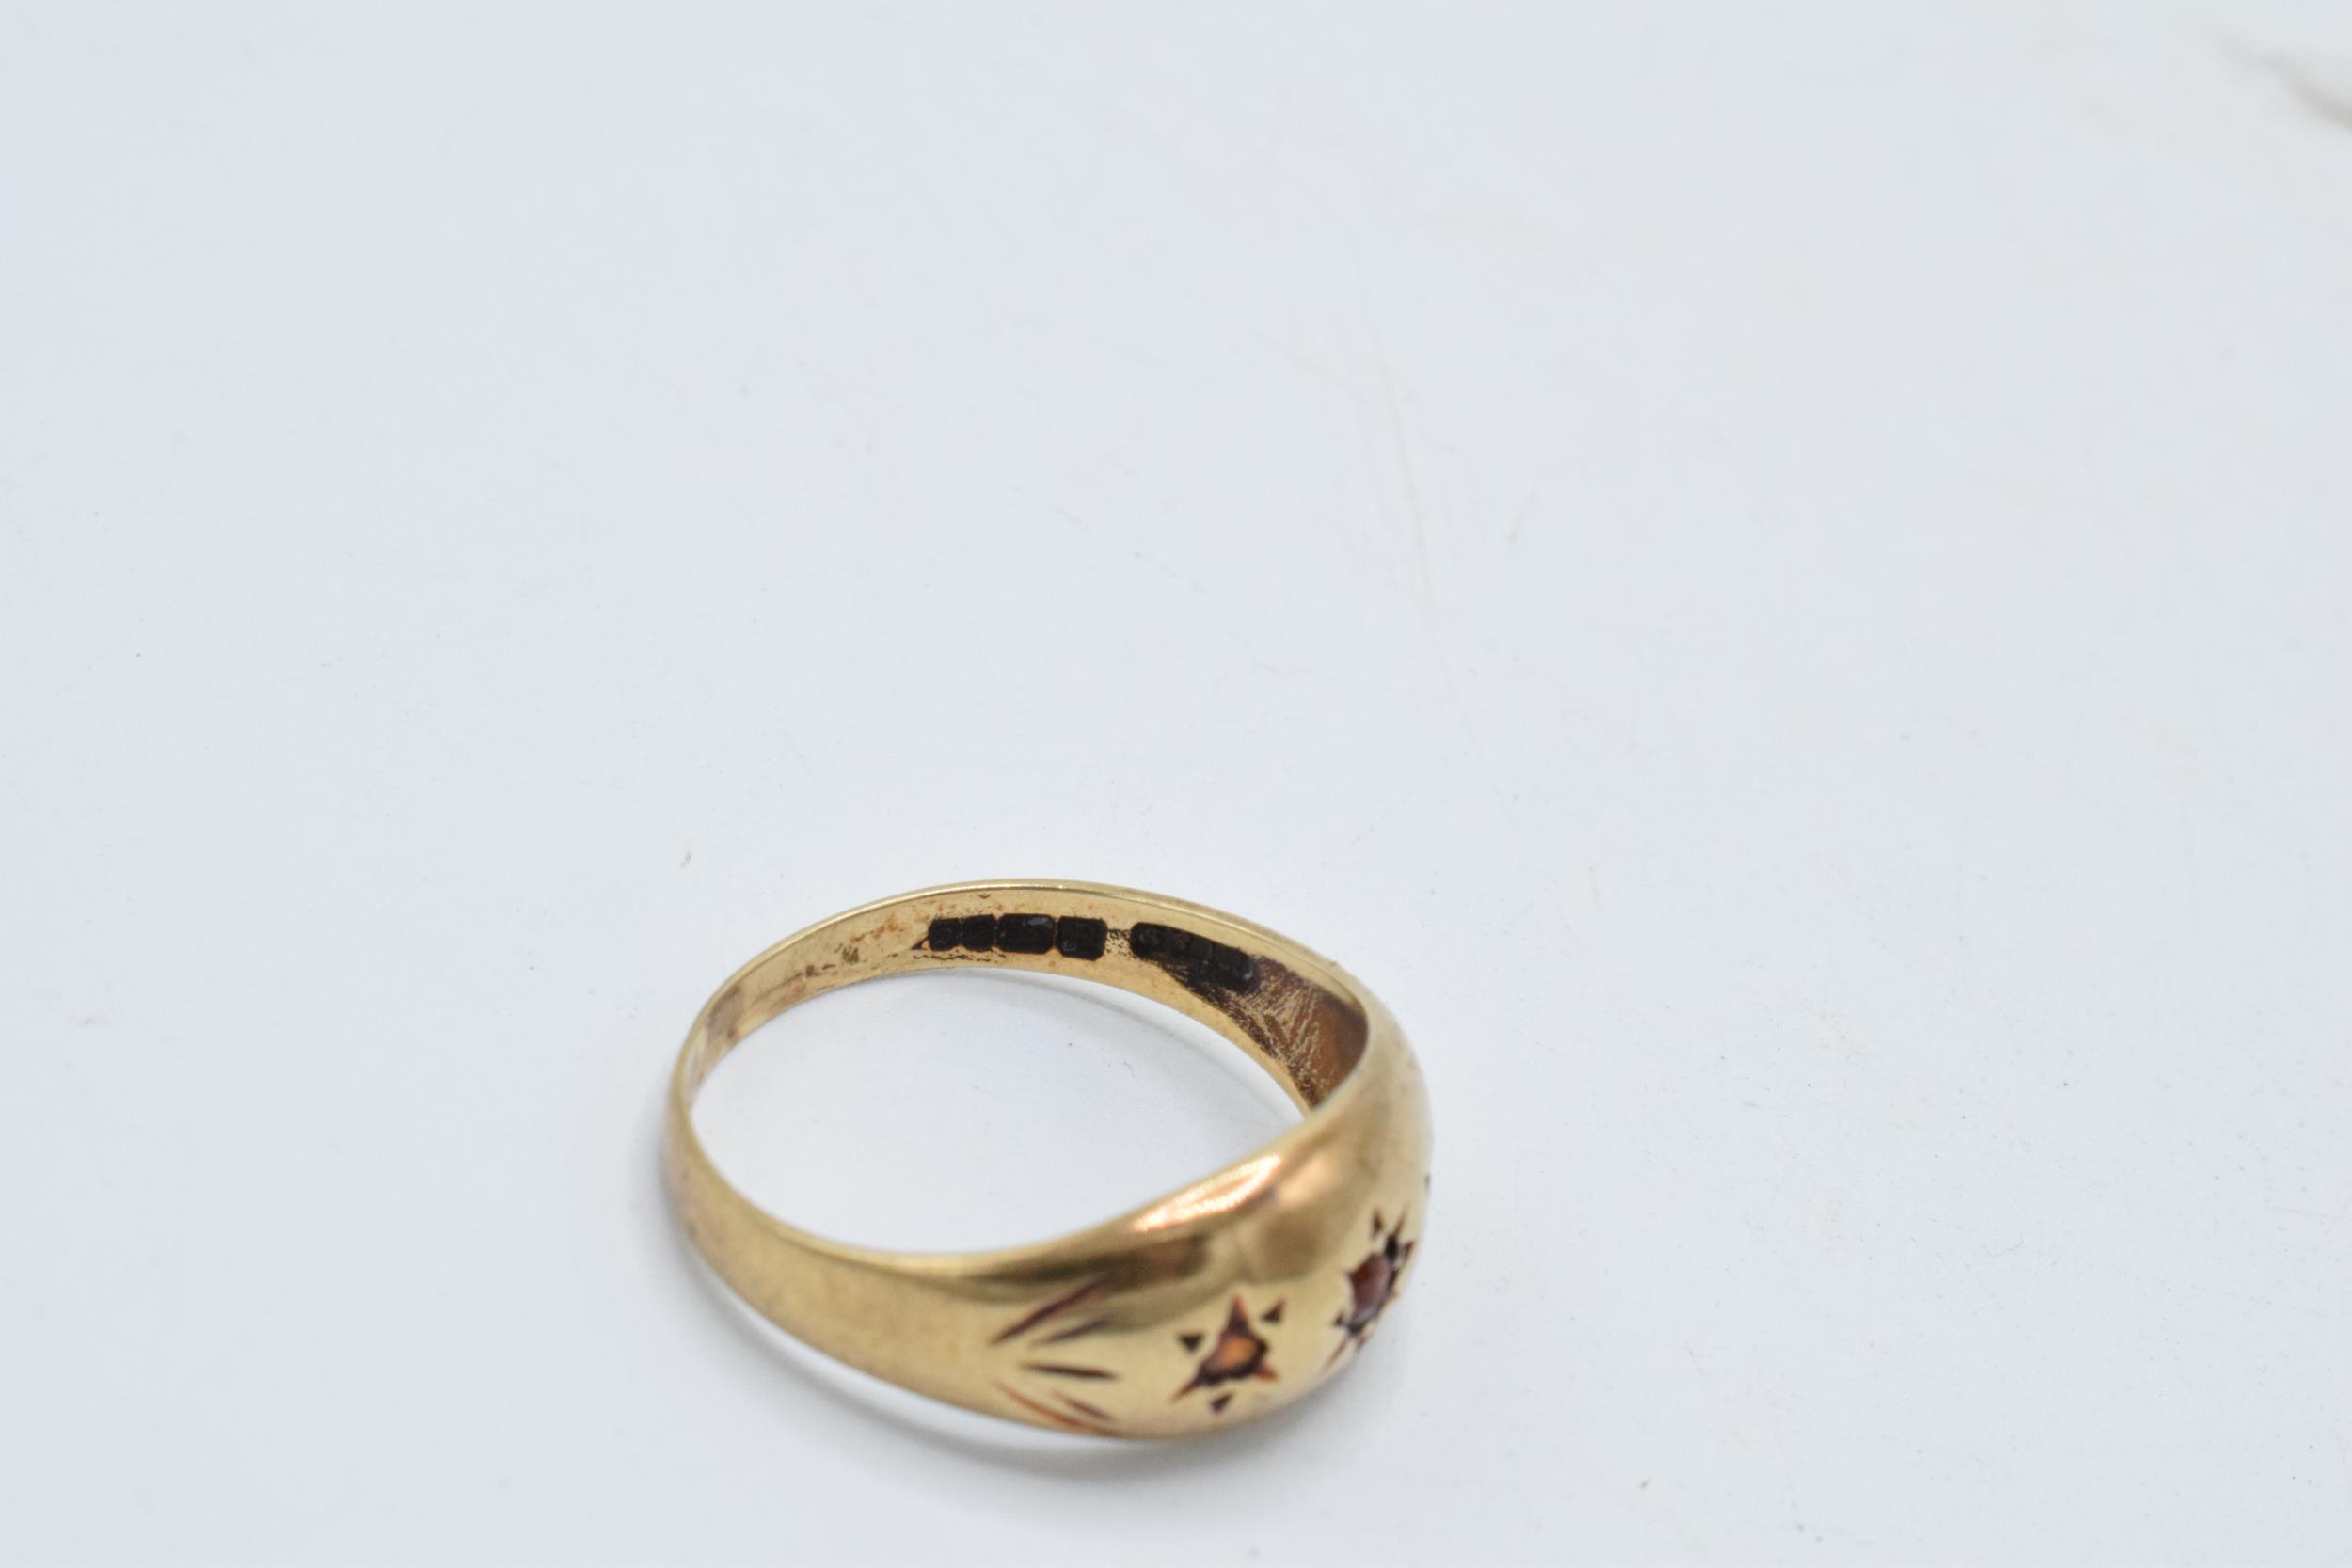 9ct gold 3 stone garnet ring, 2.1 grams, size O/P. - Image 2 of 2